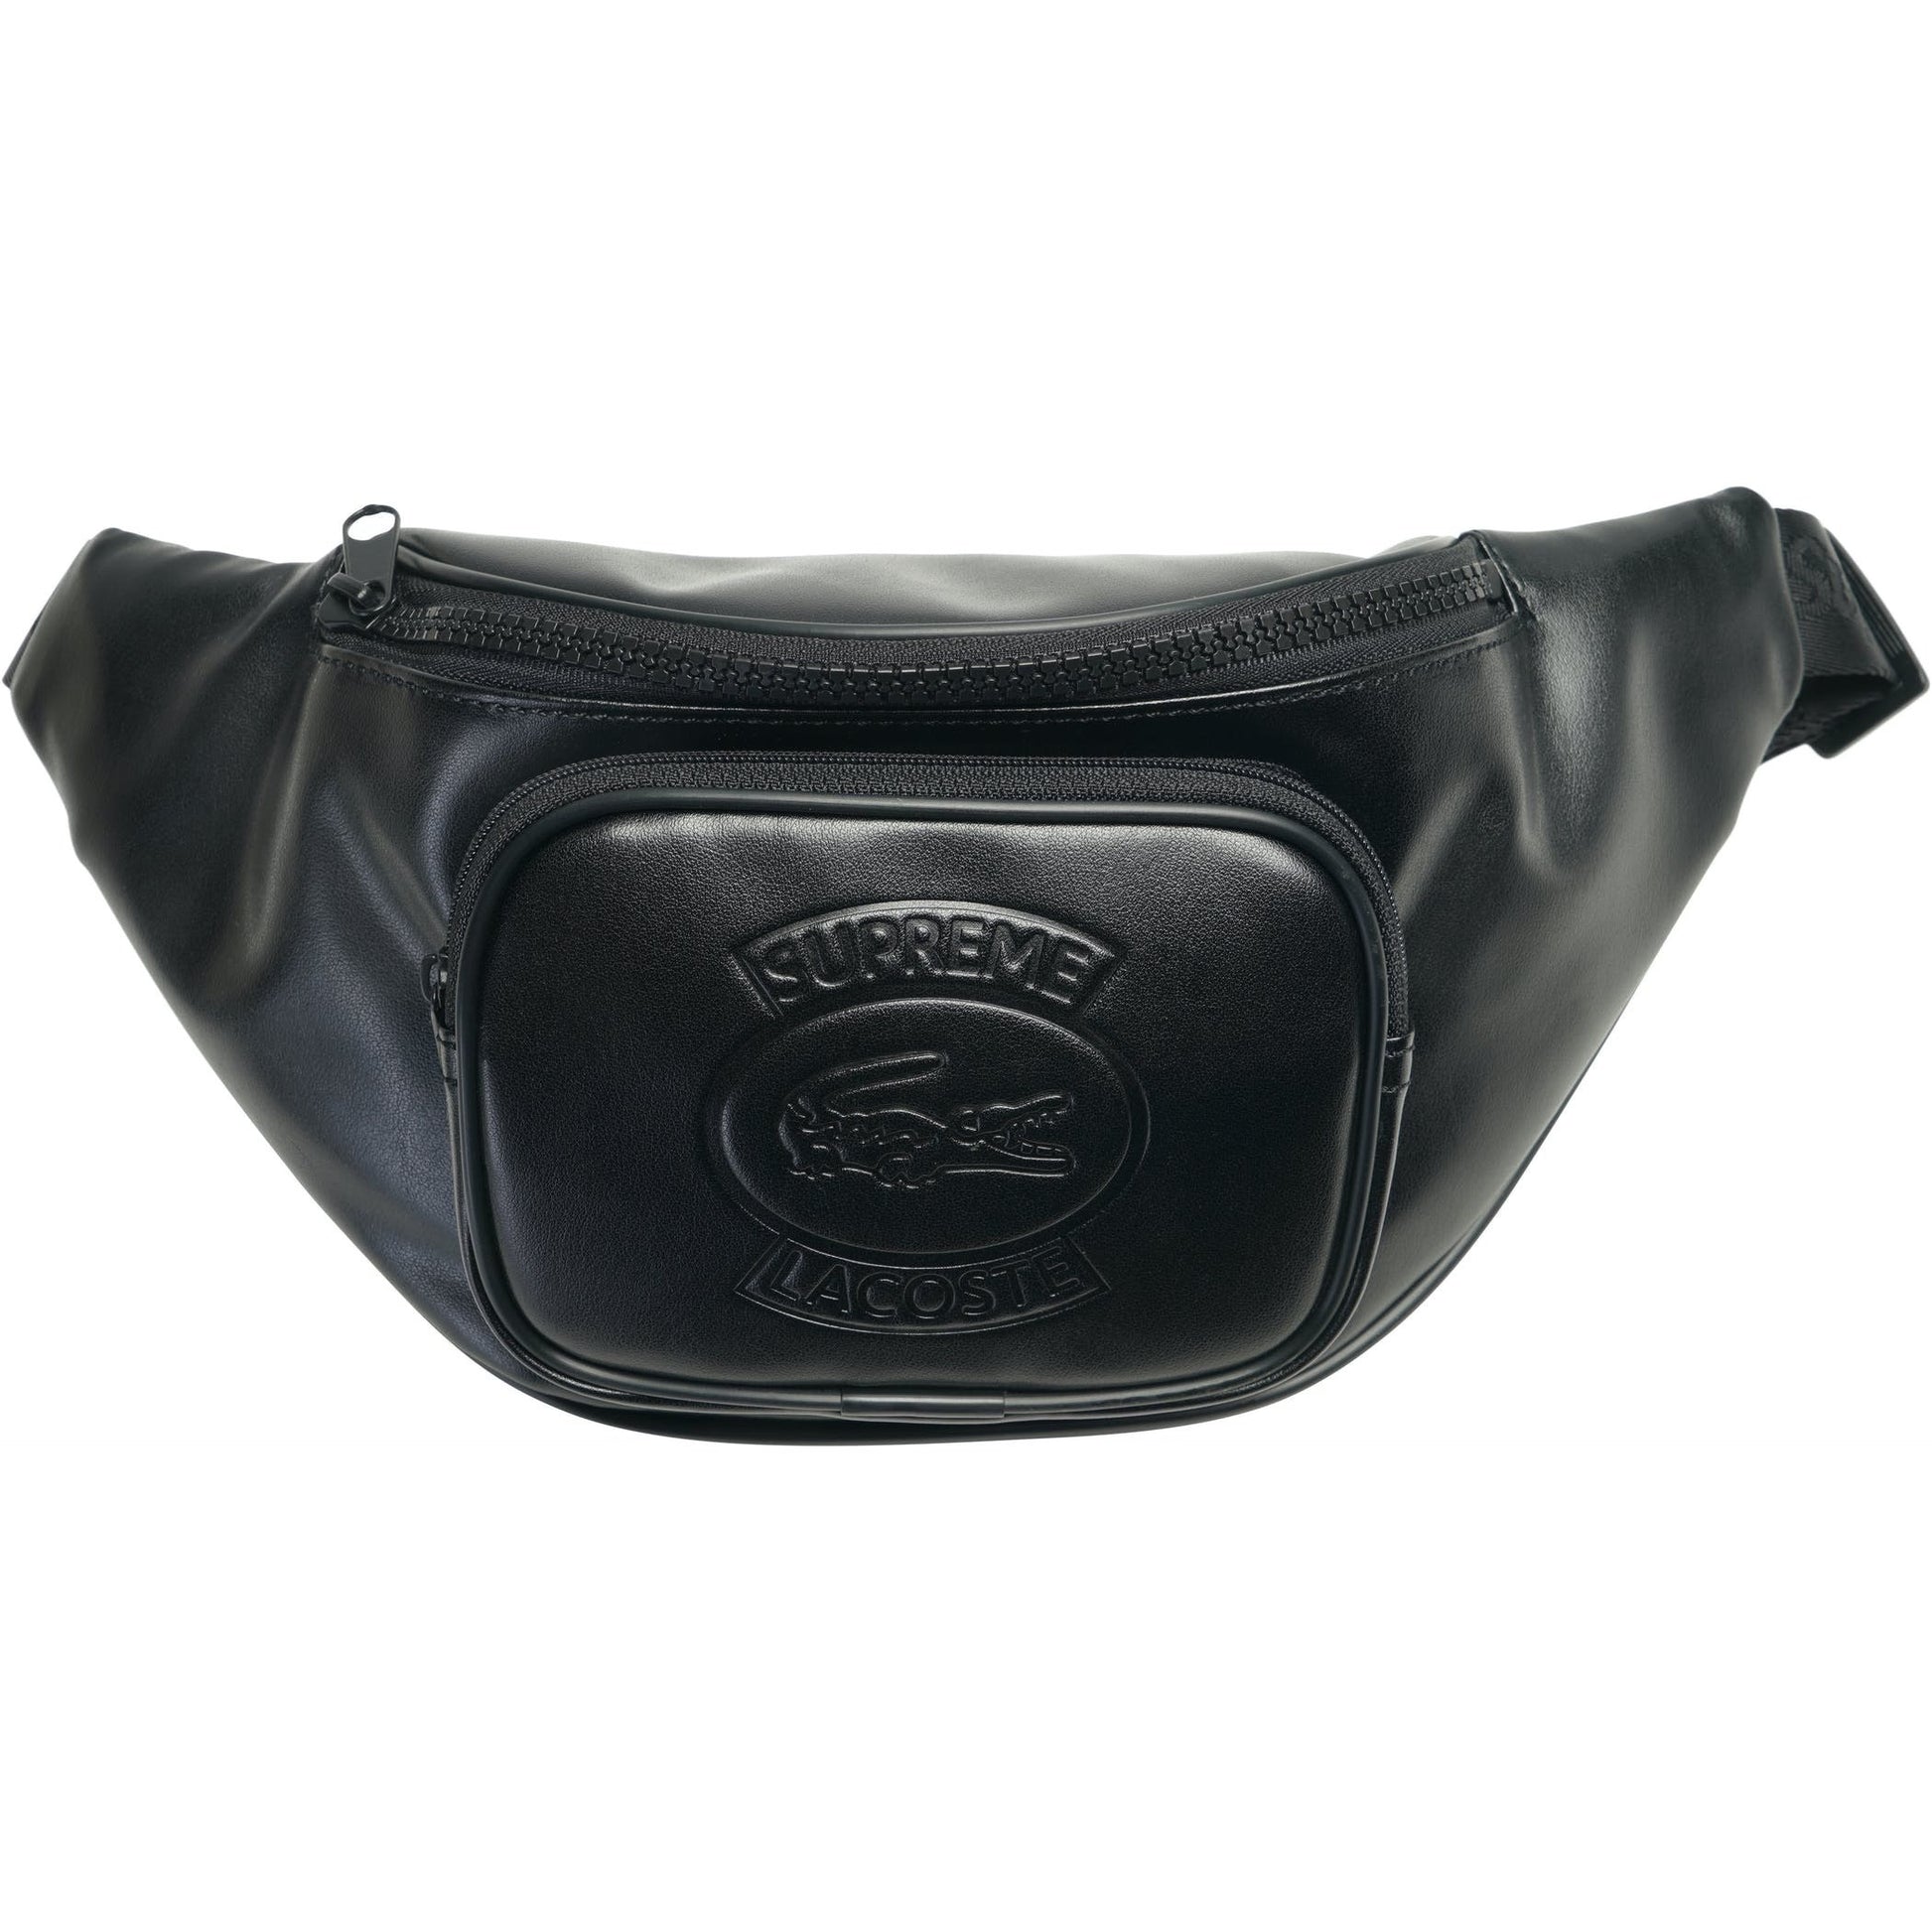 Supreme x Lacoste waist bag - black - Centrall Online